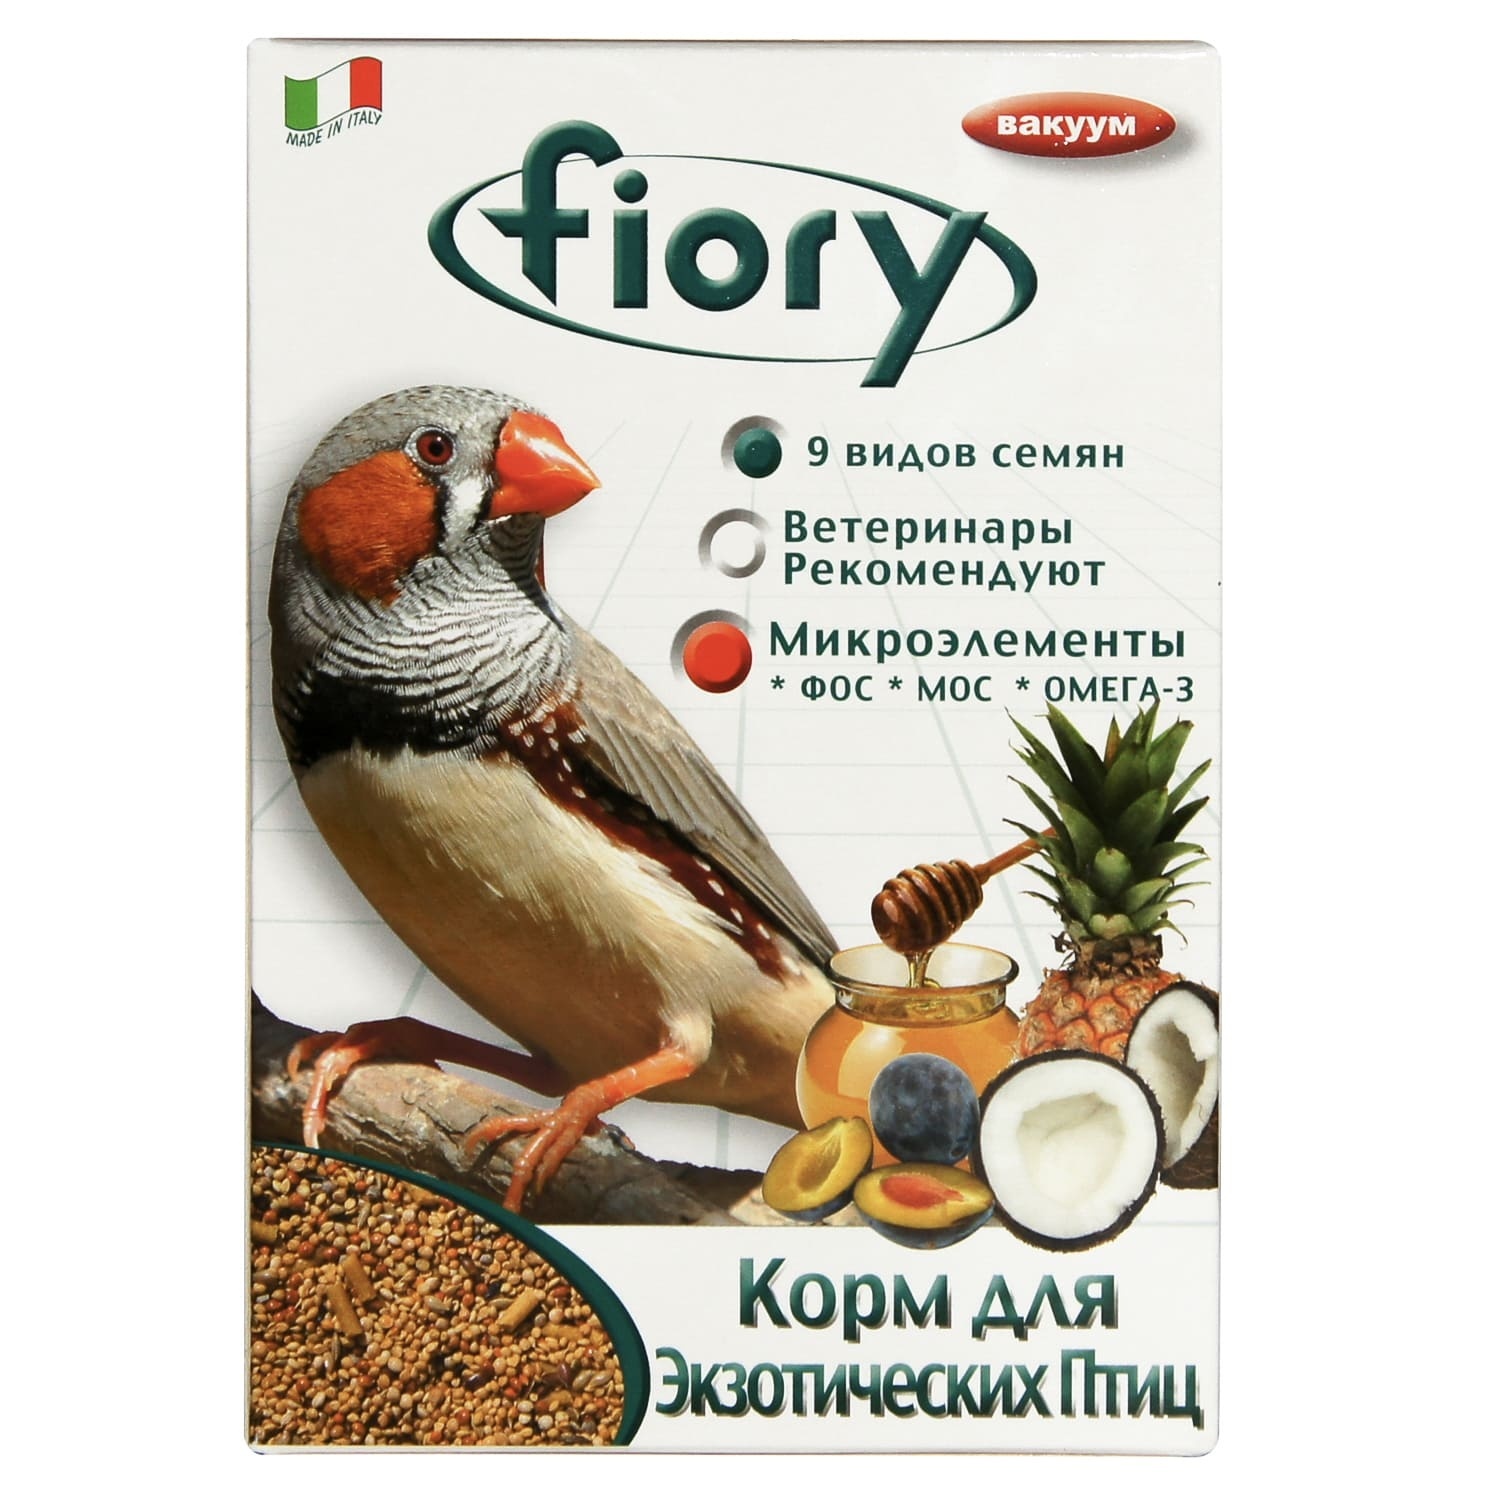 Fiory Fiory корм для экзотических птиц (400 г) fiory fiory корм для экзотических птиц 400 г